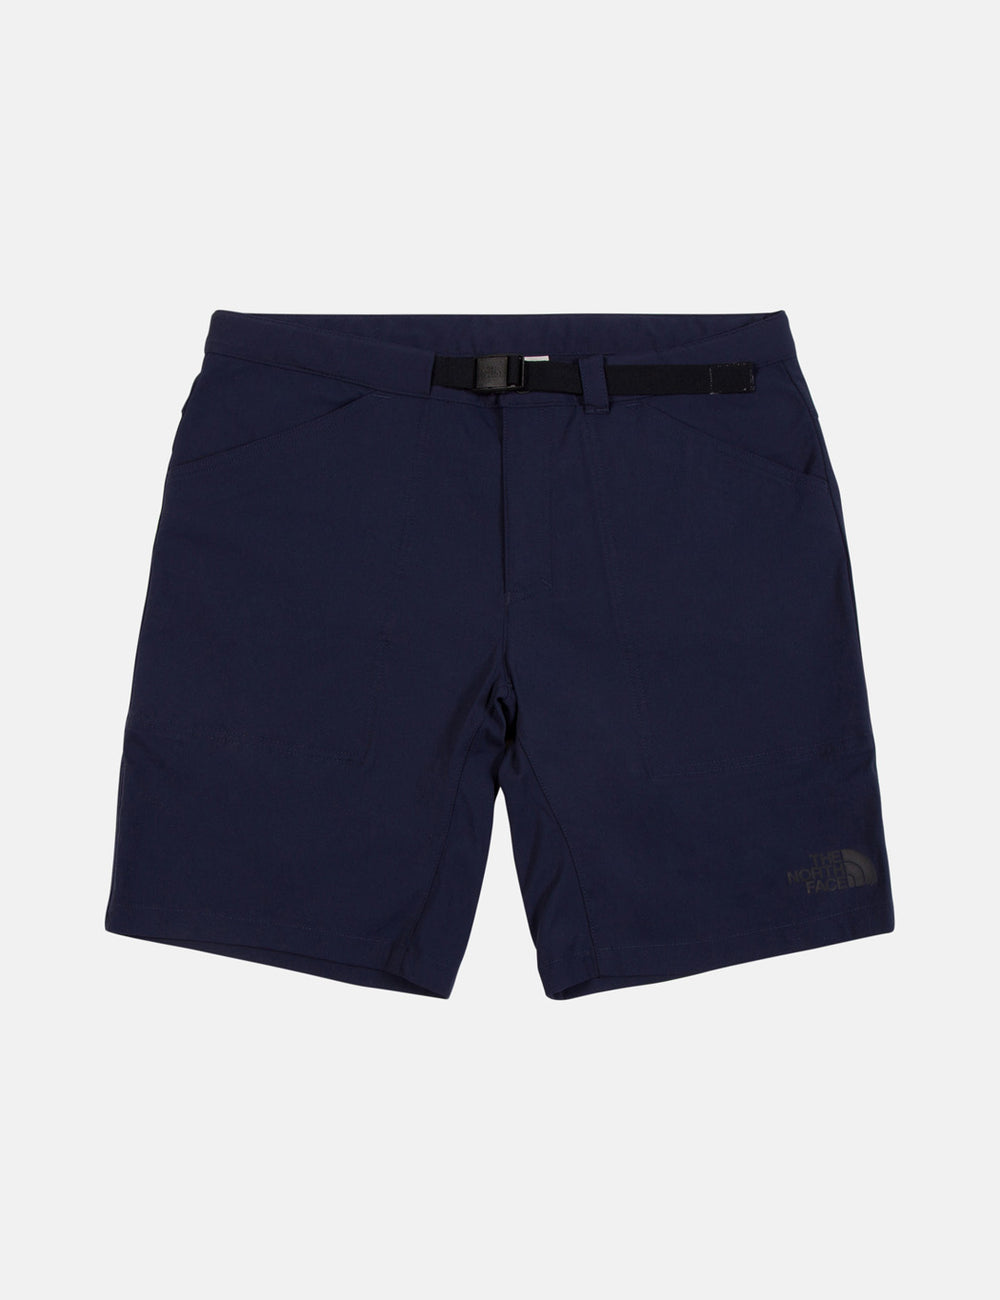 navy blue north face shorts